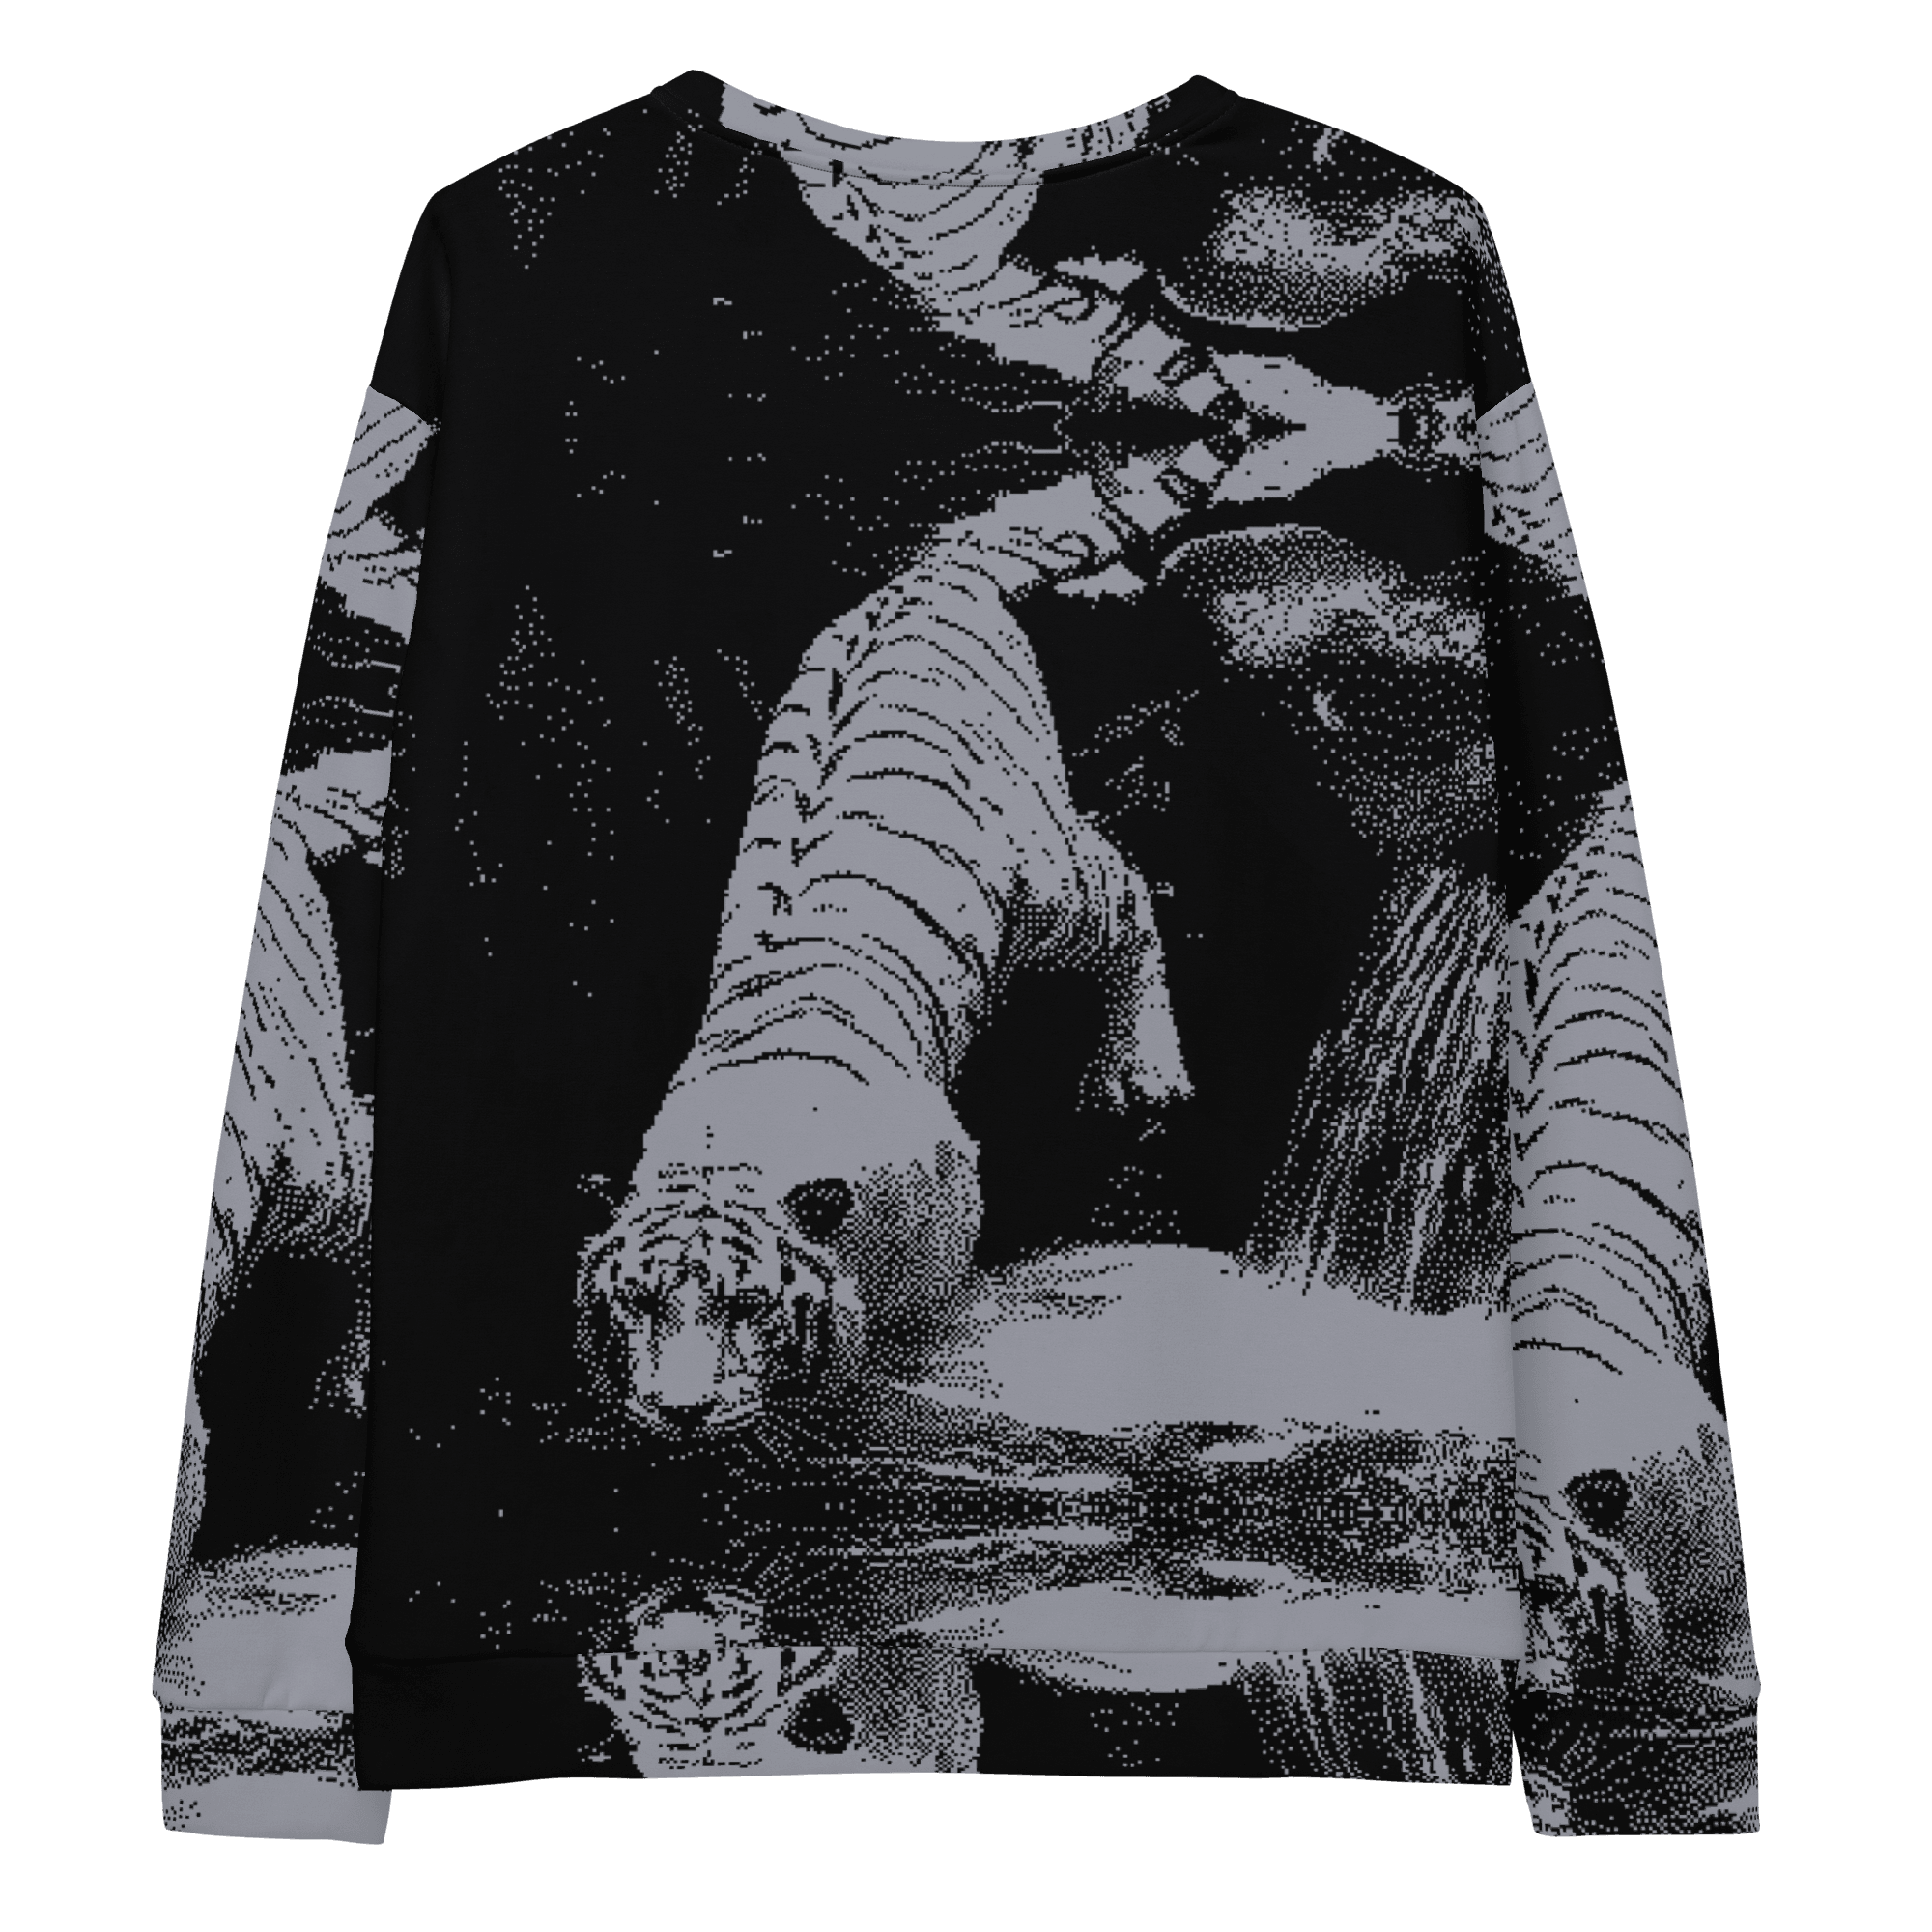 Le Tigre® Deluxe Sweatshirt (only 10 on sale) - Kikillo Club